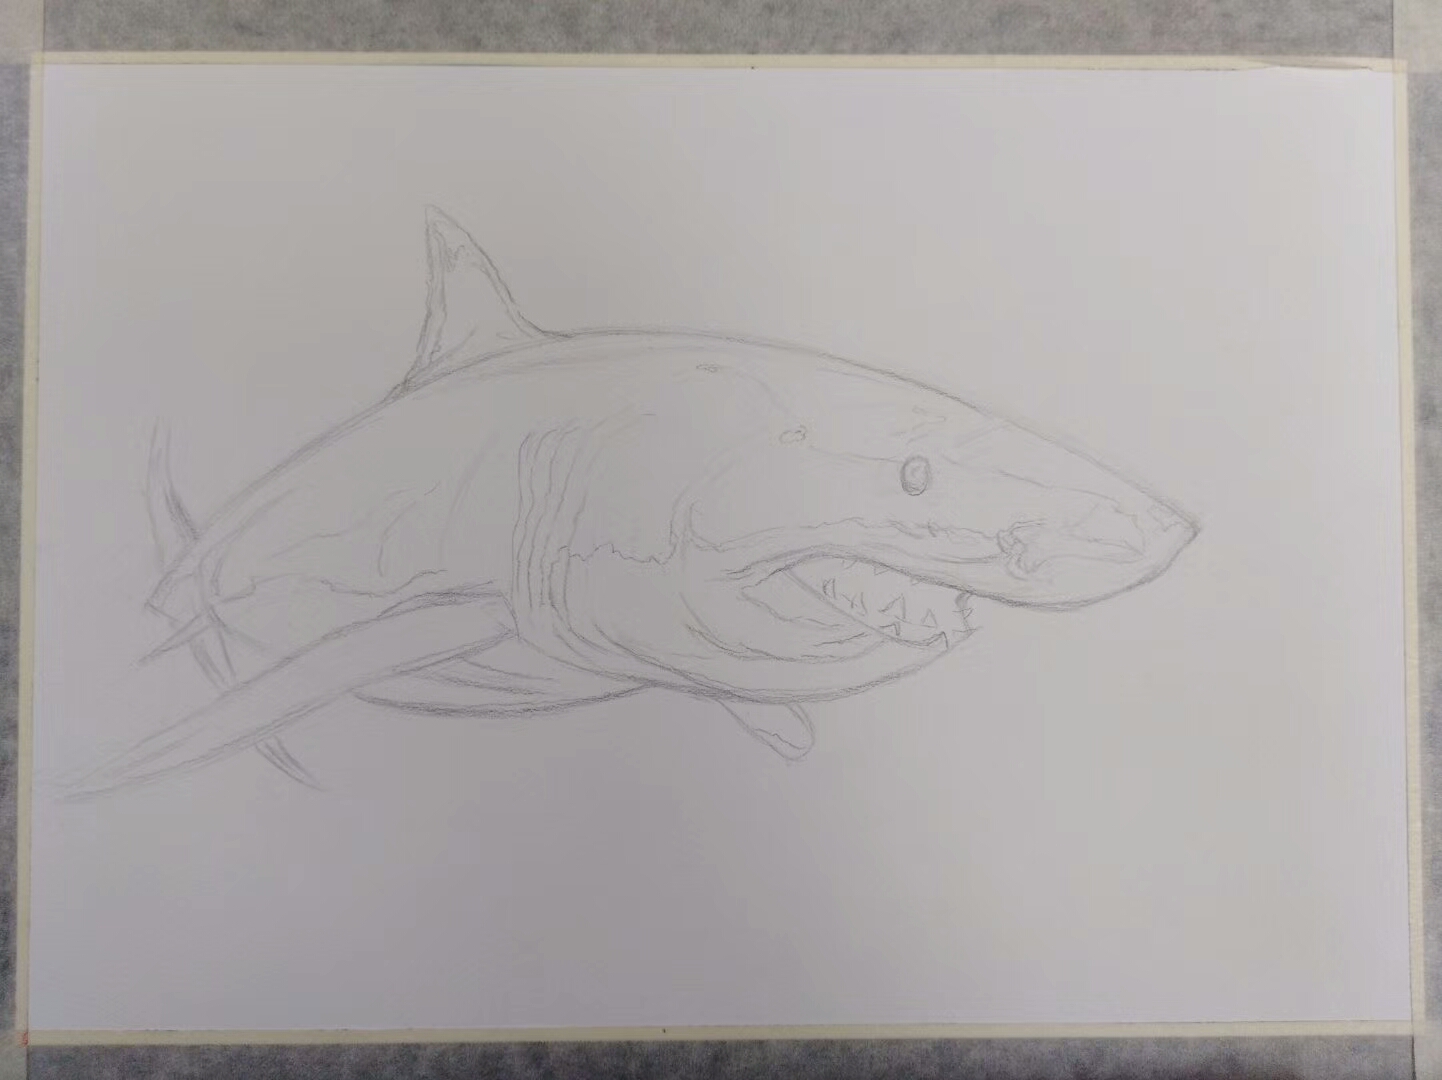 3d鲨鱼怎么画远古图片